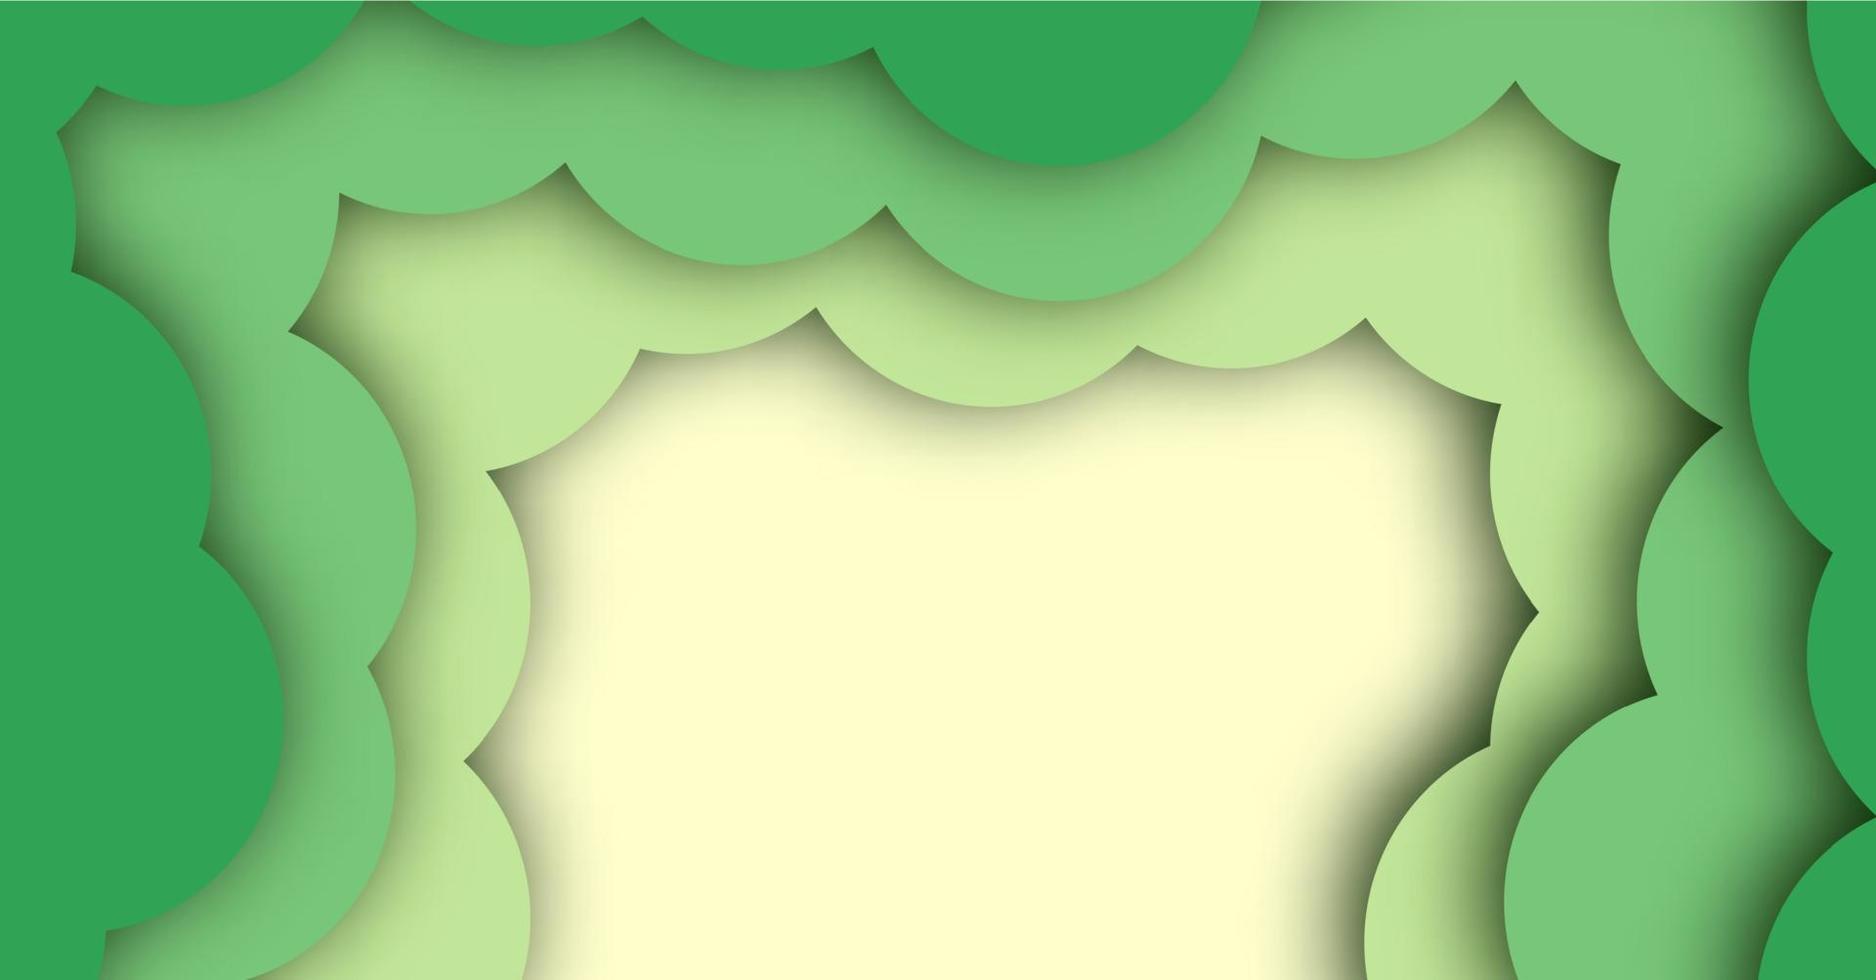 abstrakter hintergrund mit grünem papier schnitt formen bannerdesign. Vektor-Illustration vektor